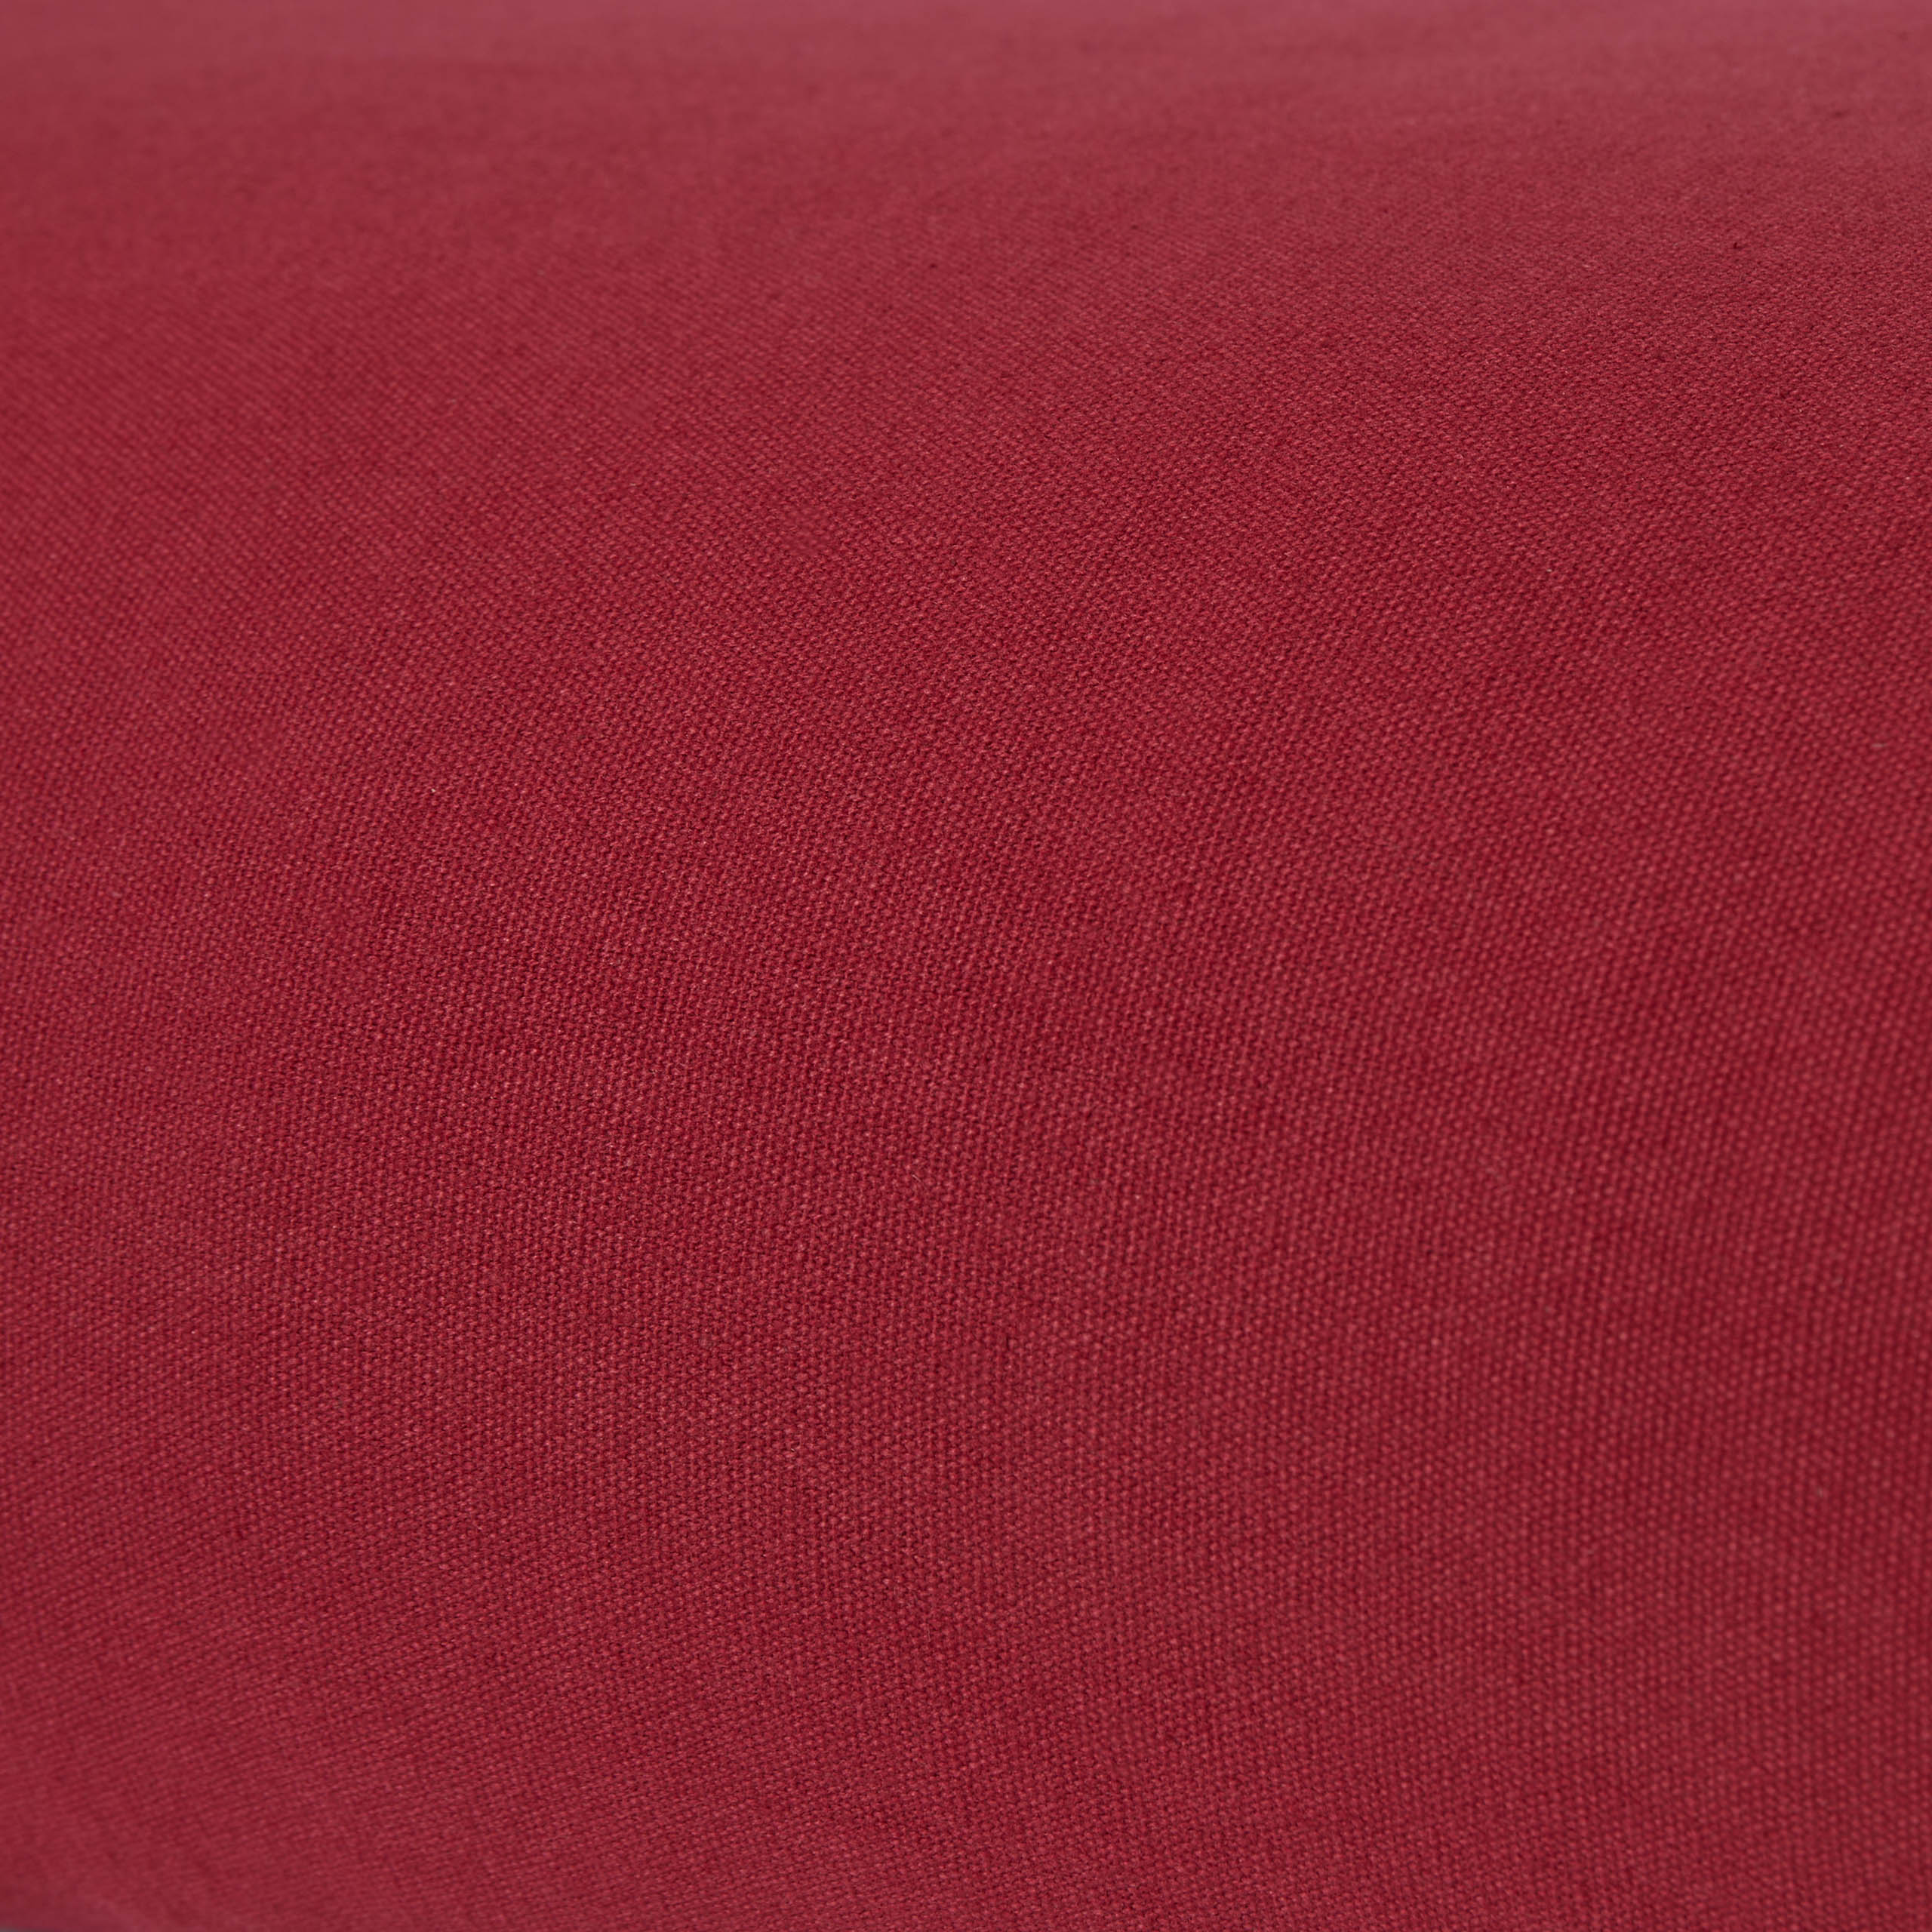 Yoga-Bolster Paravati - gefüllt mit Bio-Dinkelspelz - 67 x 22 x 13 cm - Rot